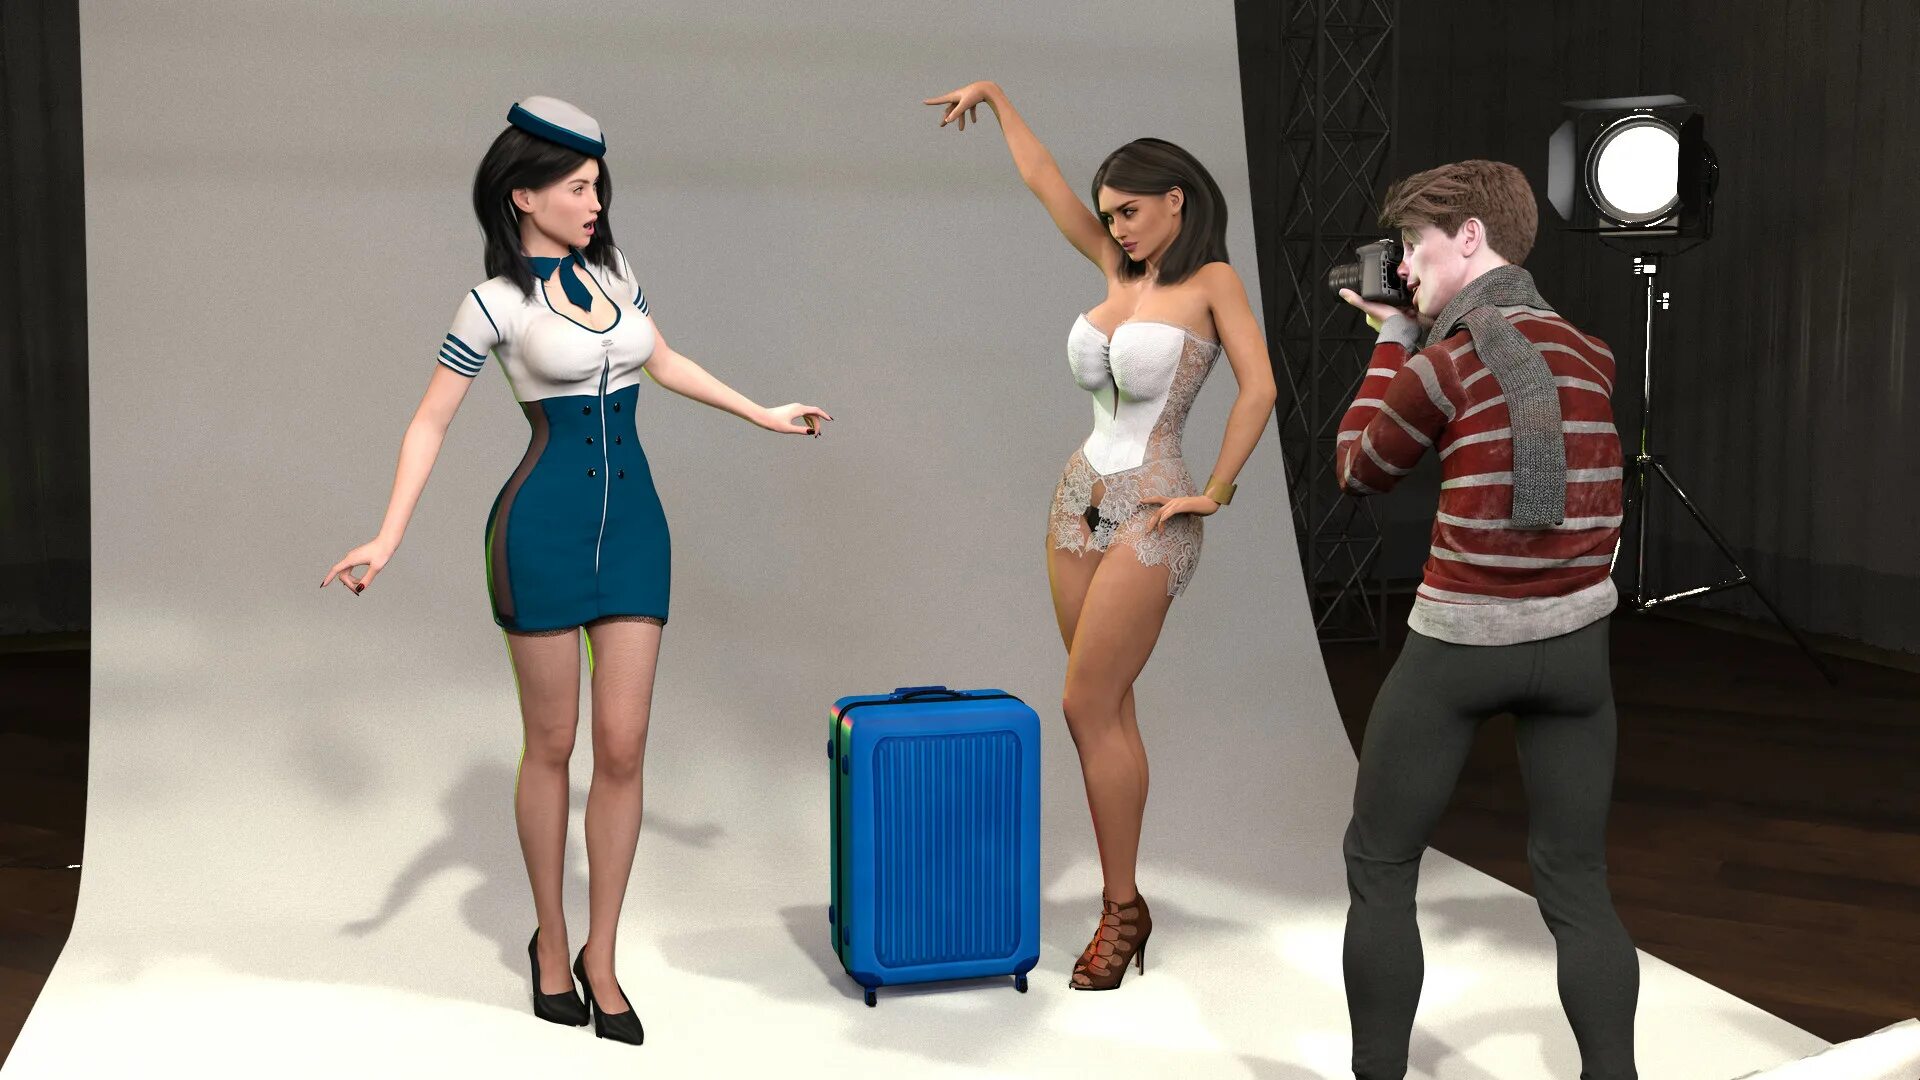 The Twist игра. Fashion Business игра. Fashion Business: Monica’s Adventures 2.2 тюрьма. Fashion Business картинки из игры.